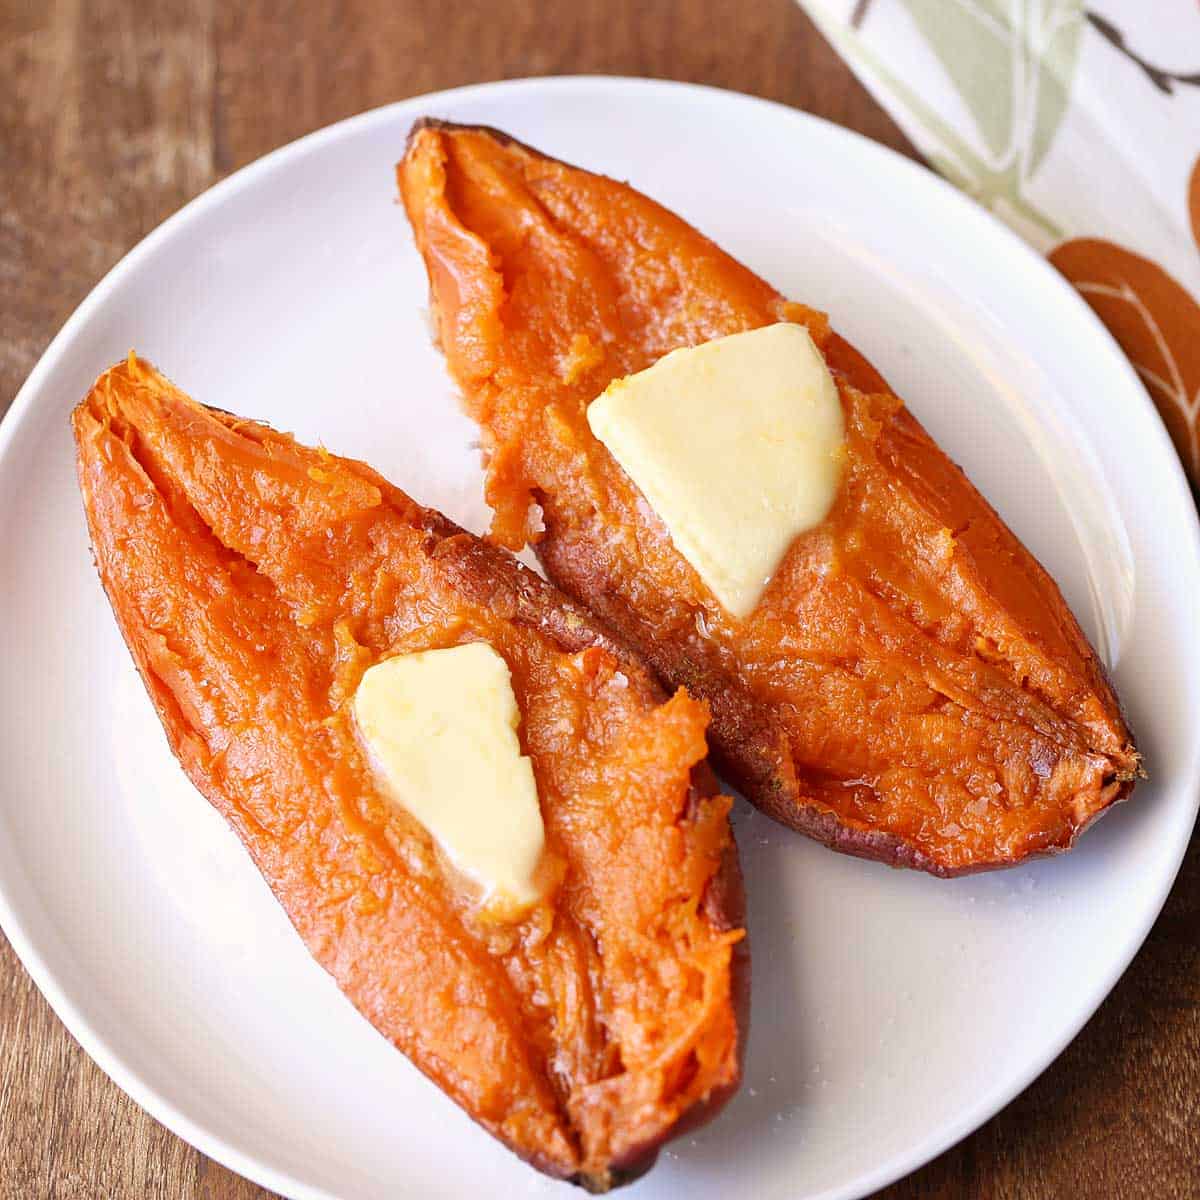 https://healthyrecipesblogs.com/wp-content/uploads/2014/02/microwave-sweet-potato-featured-2021.jpg